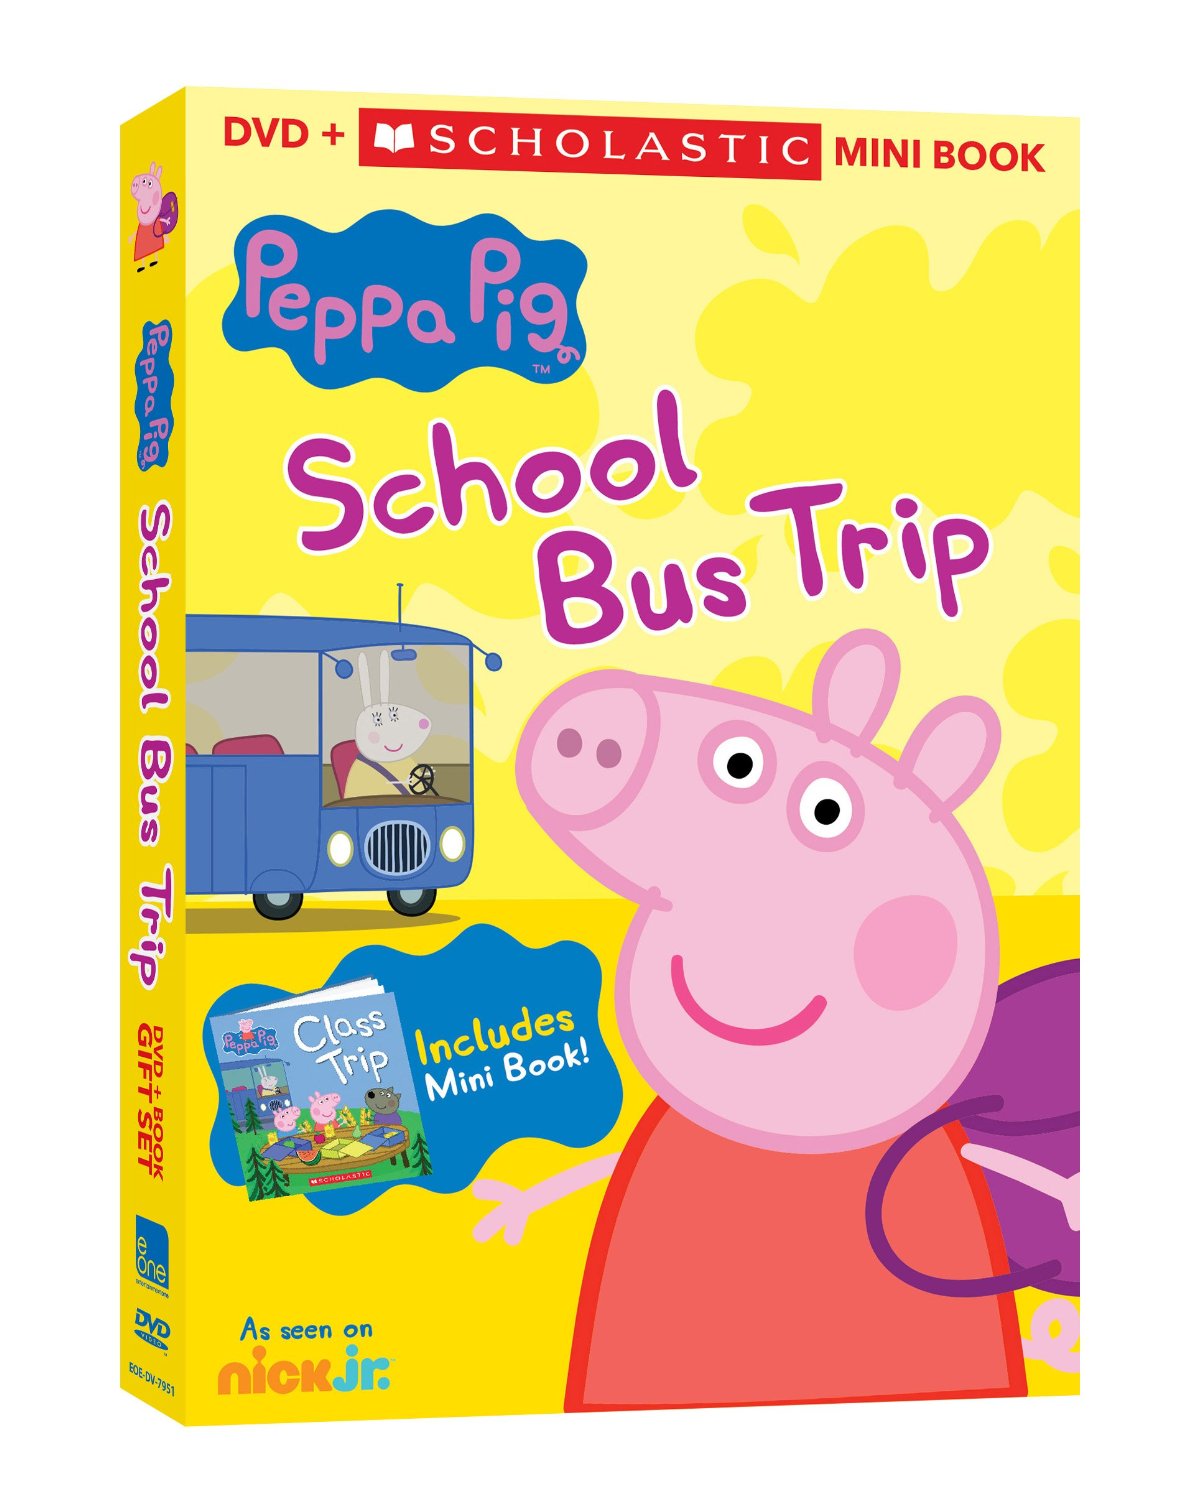 Peppa Pig School Bus Trip DVD Review on NeuFutur.com